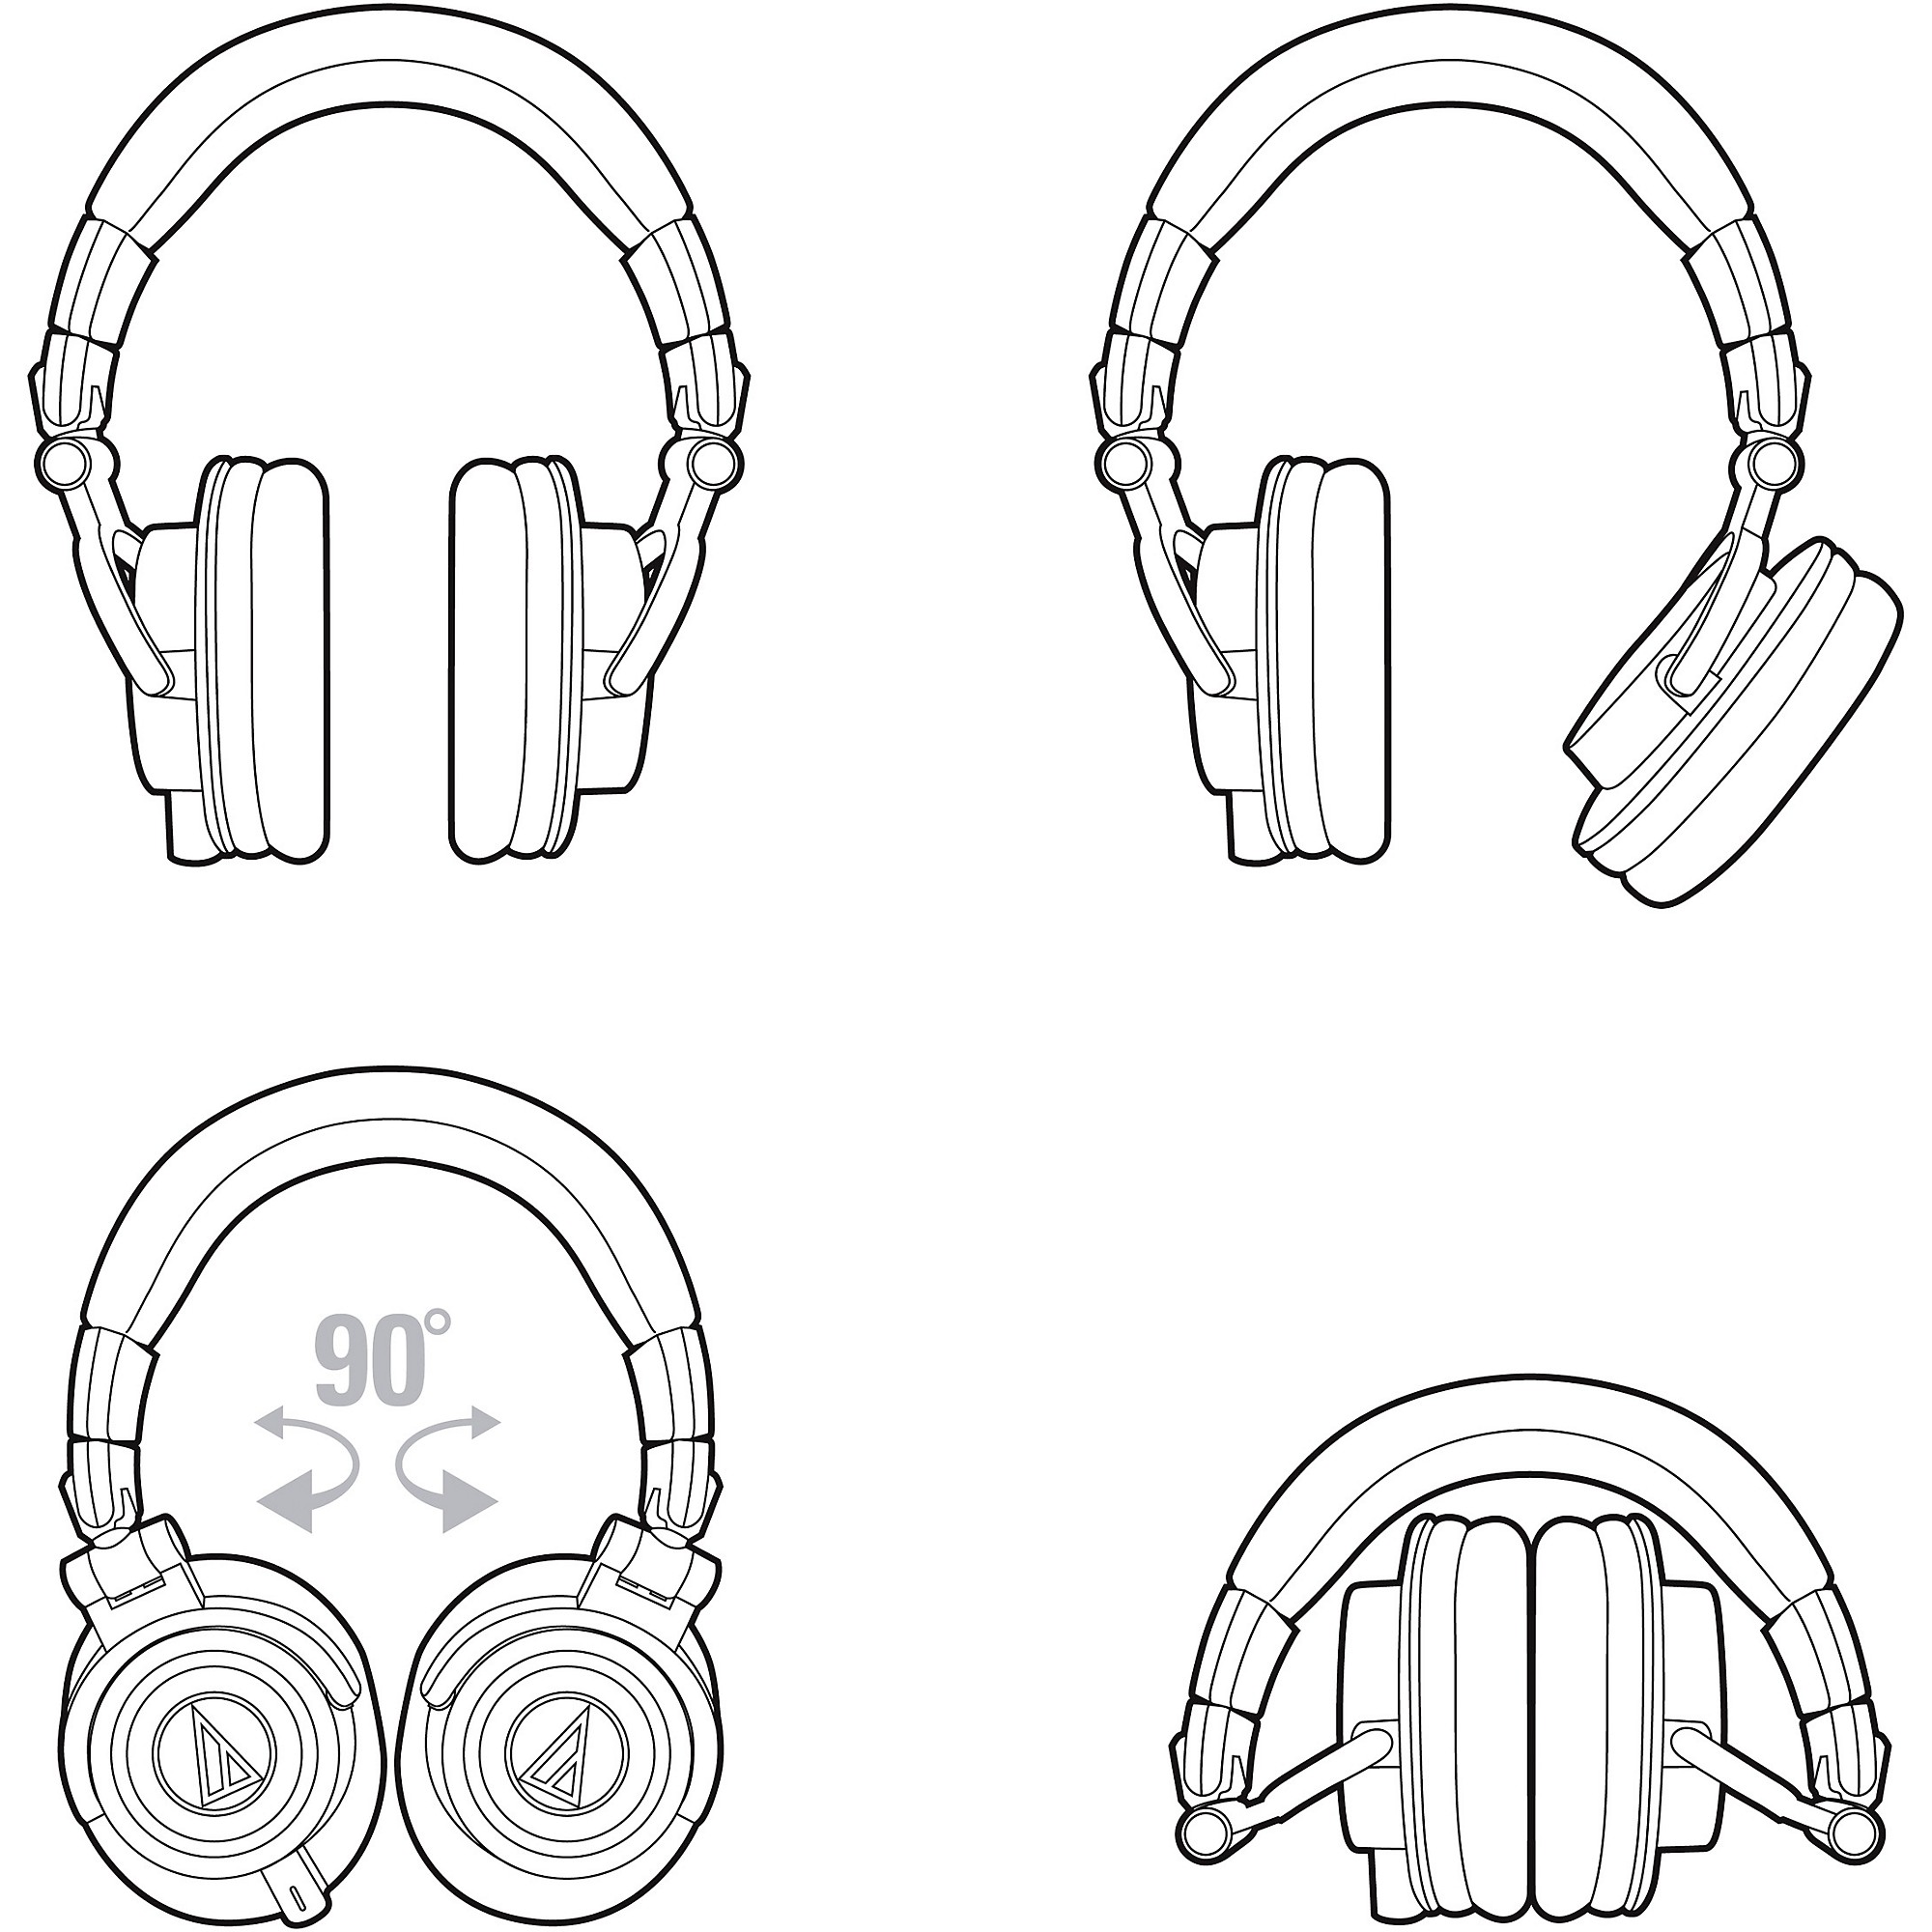 Audio-Technica ATH-M50x Closed-Back Studio Monitoring Headphones